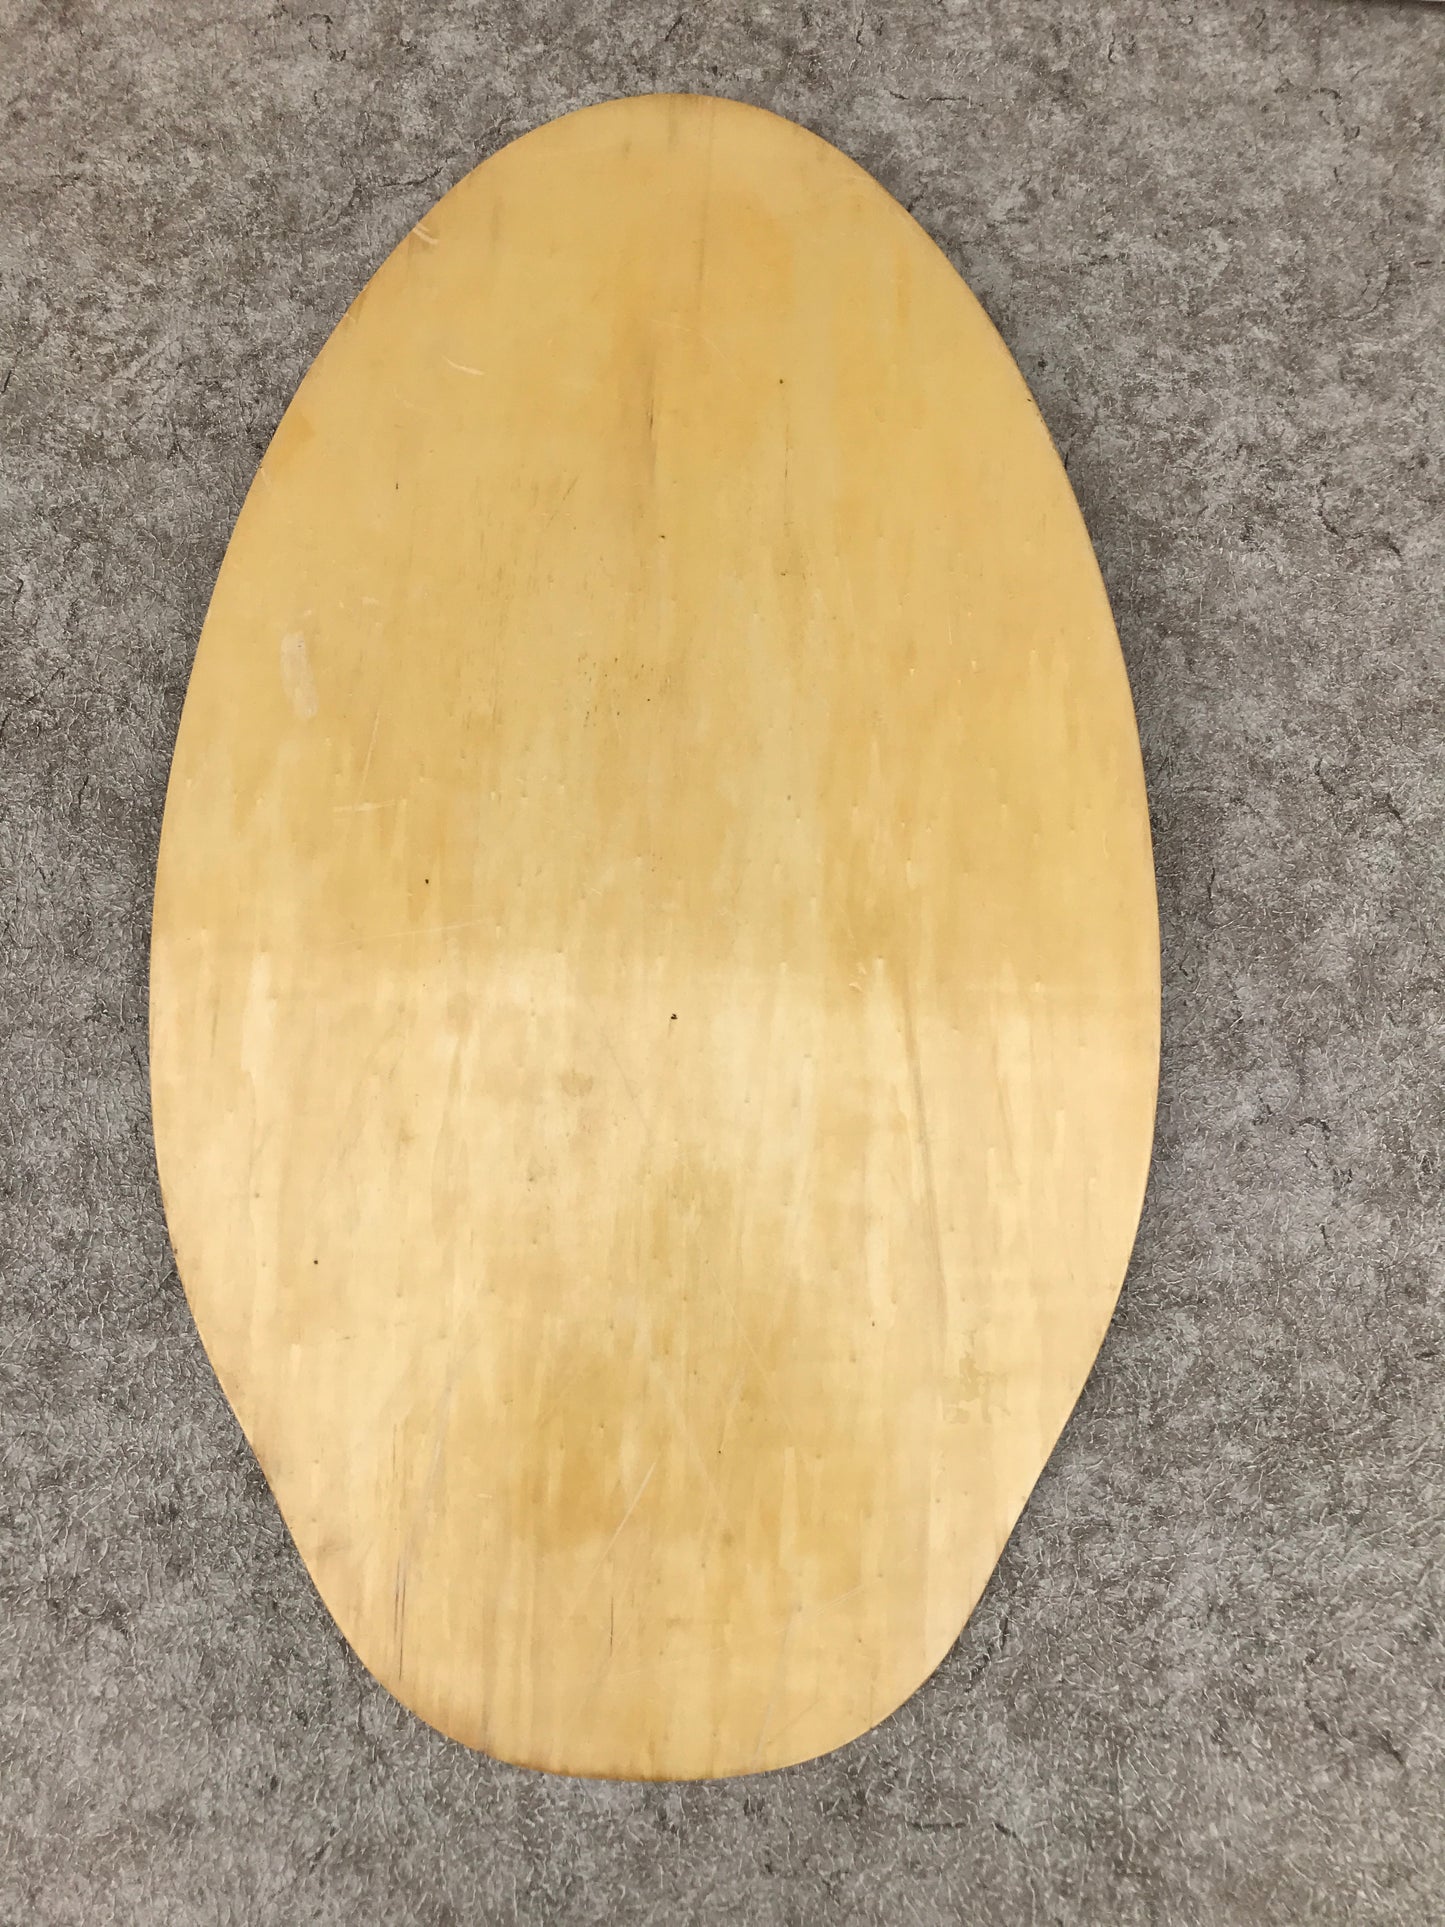 Surf skimboard 35x20” skim board boogie board swim wood excellent